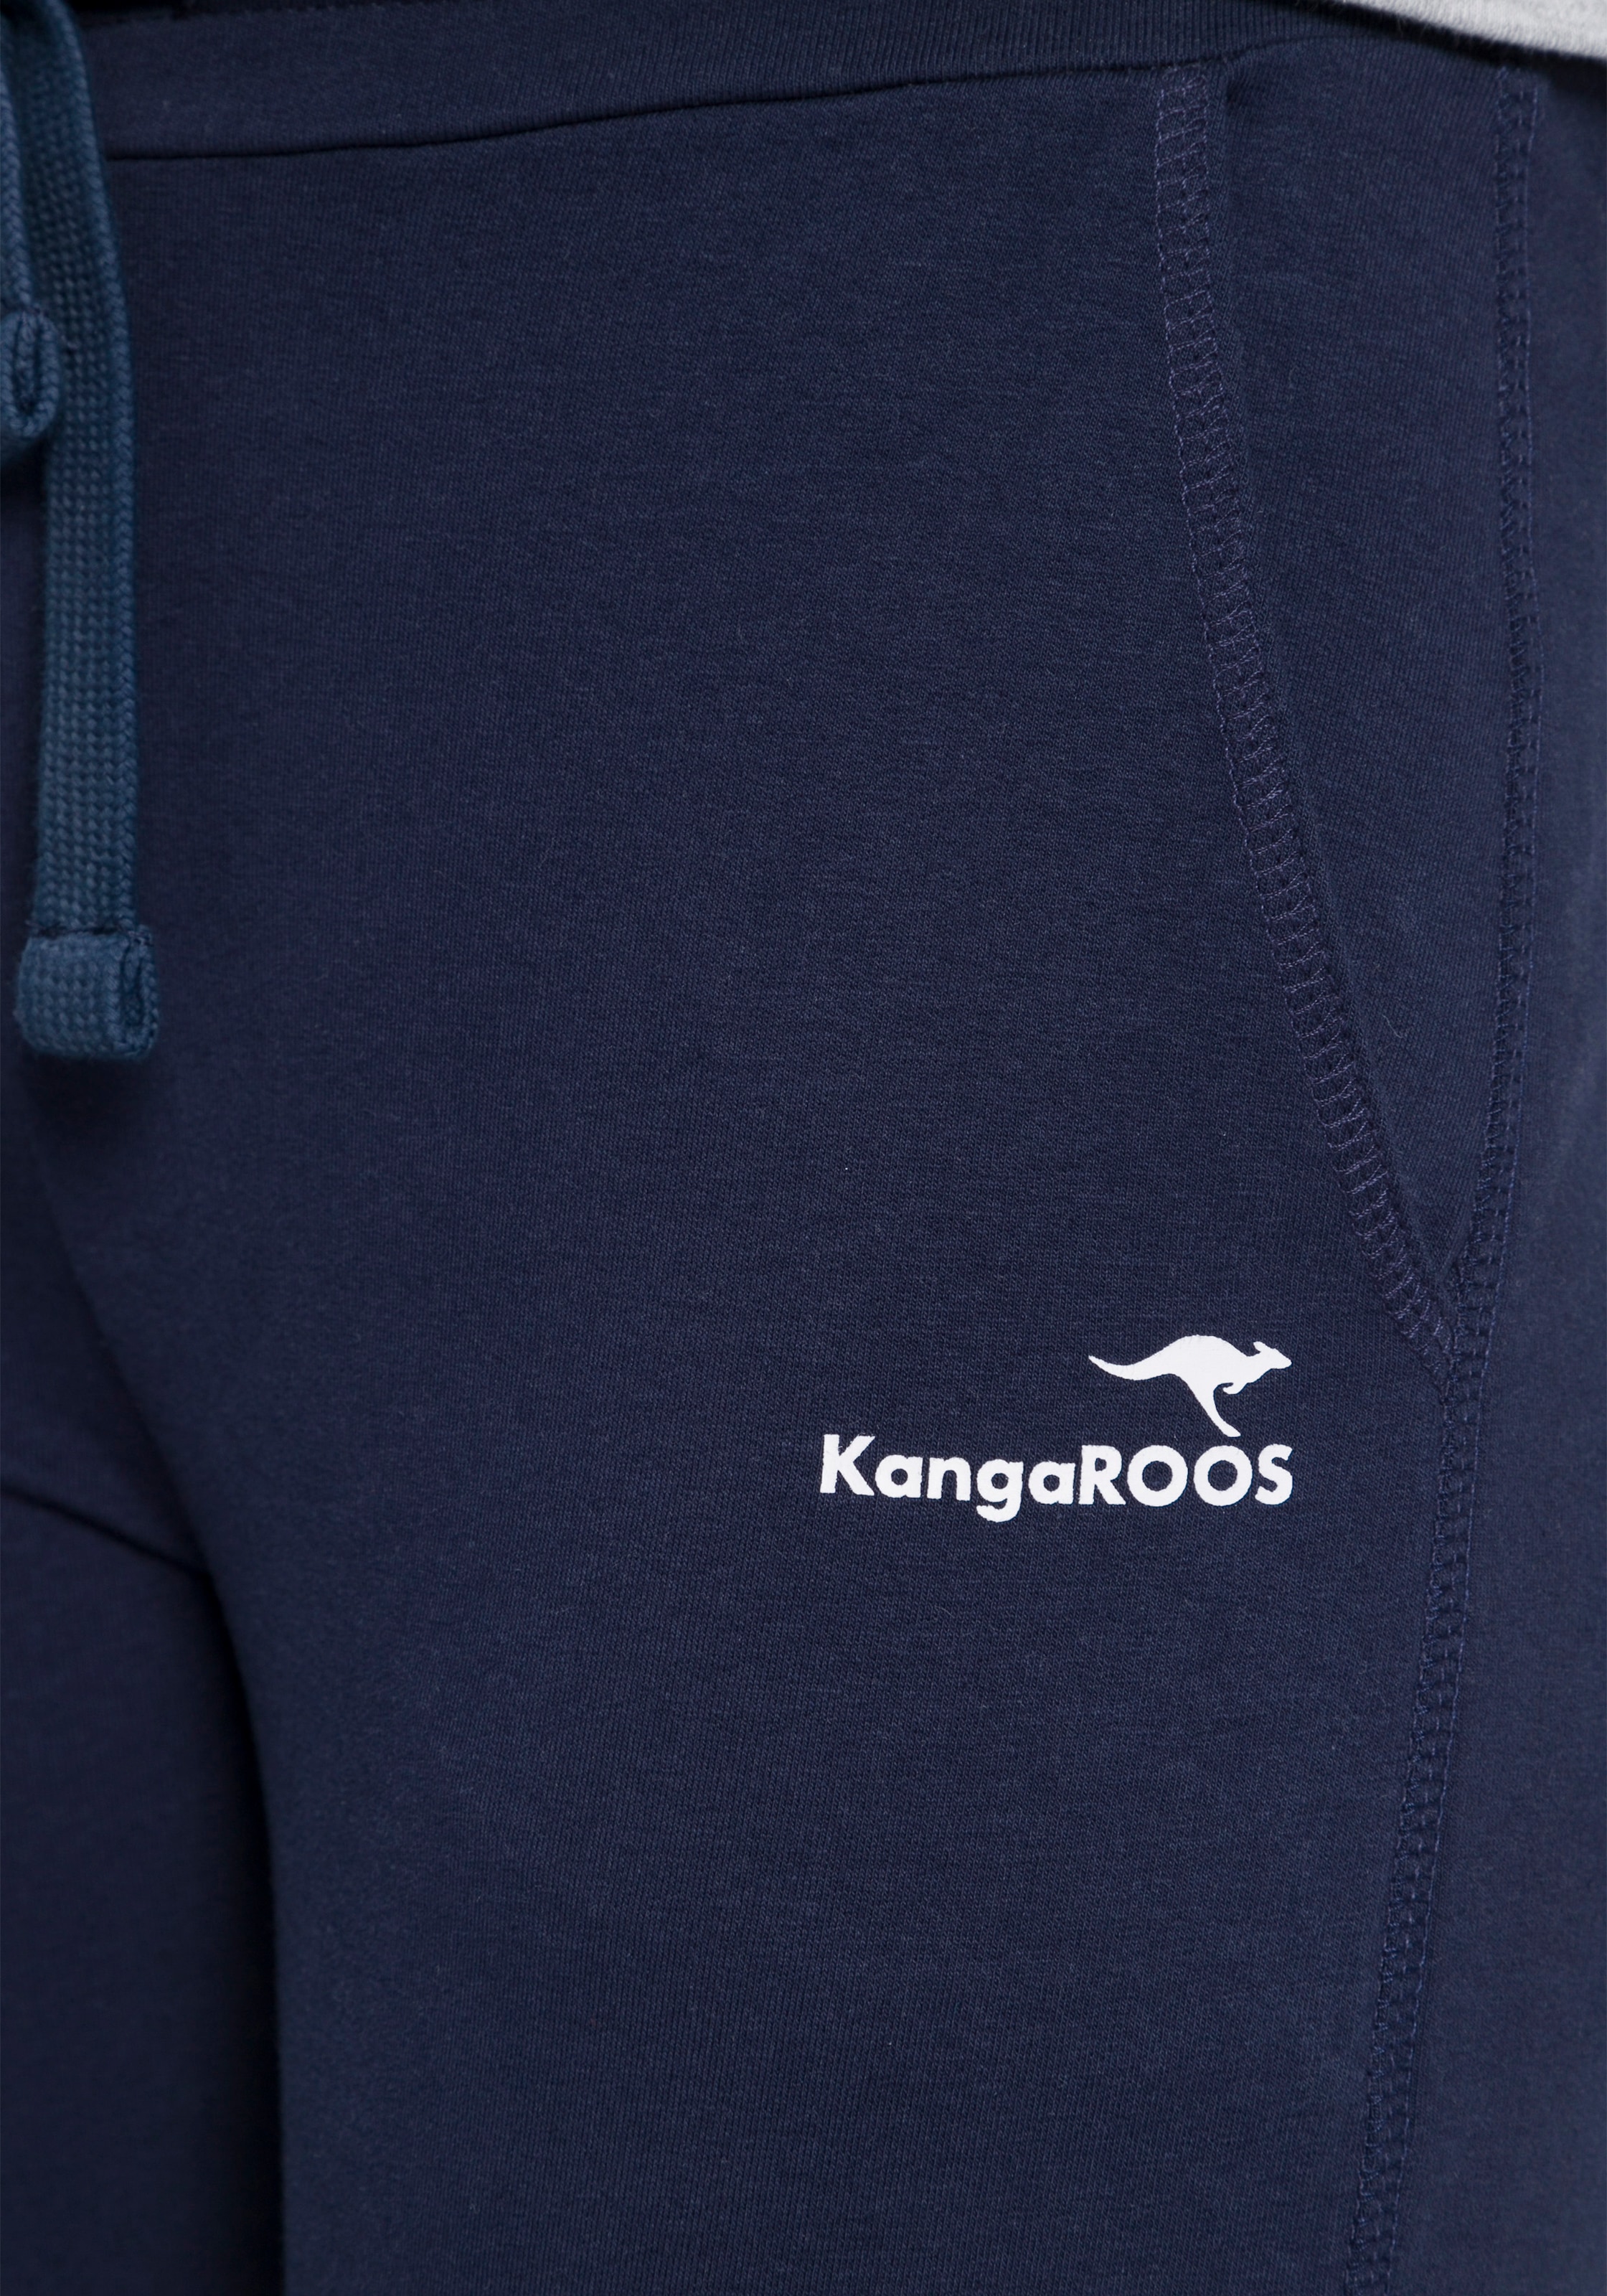 KangaROOS Jogginghose, online in mit 7/8-Länge Logo-Druck